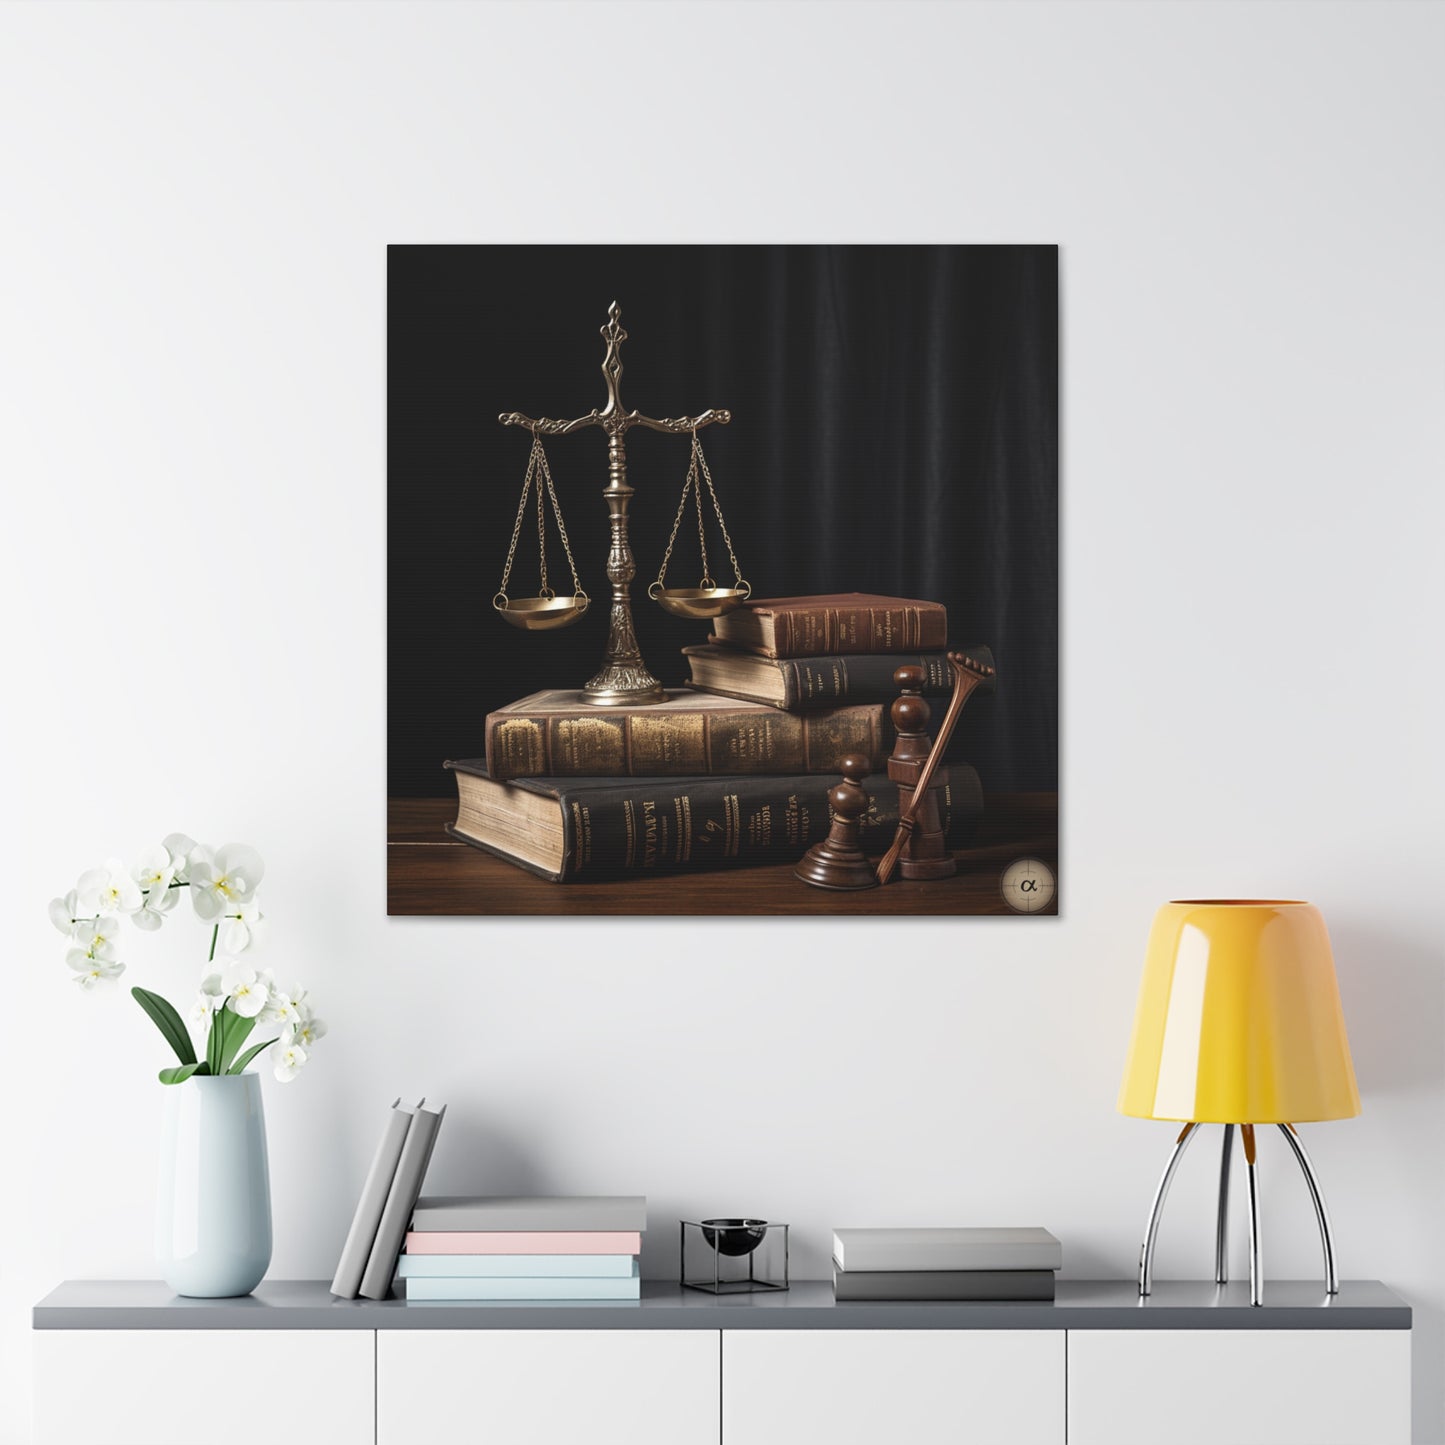 Art by Kendyll: "The Written Law" on Canvas